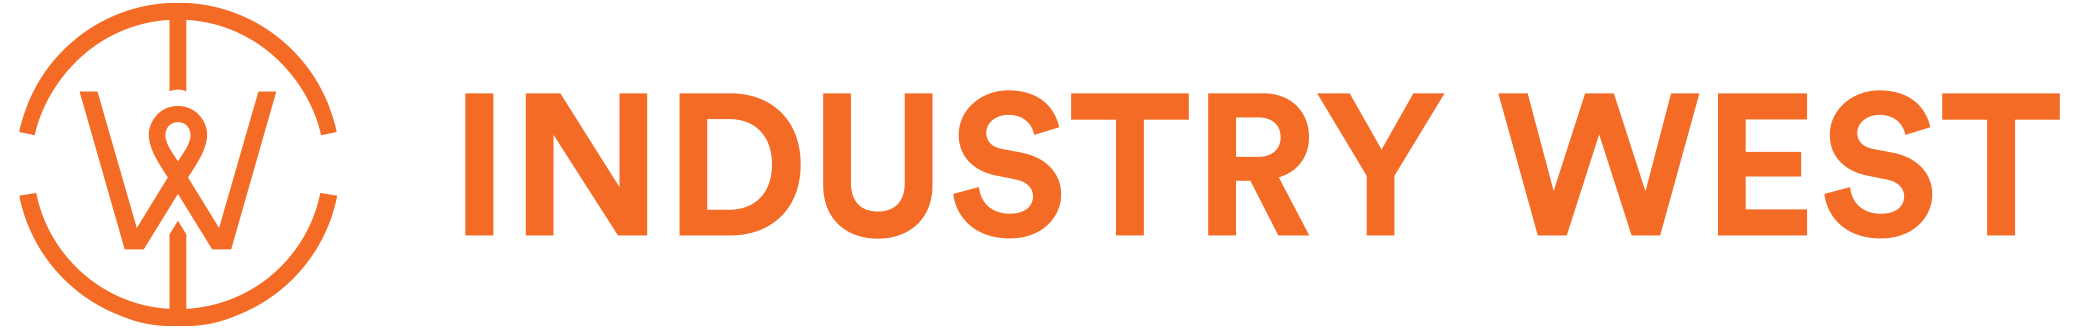 IndustryWest_USA Logo